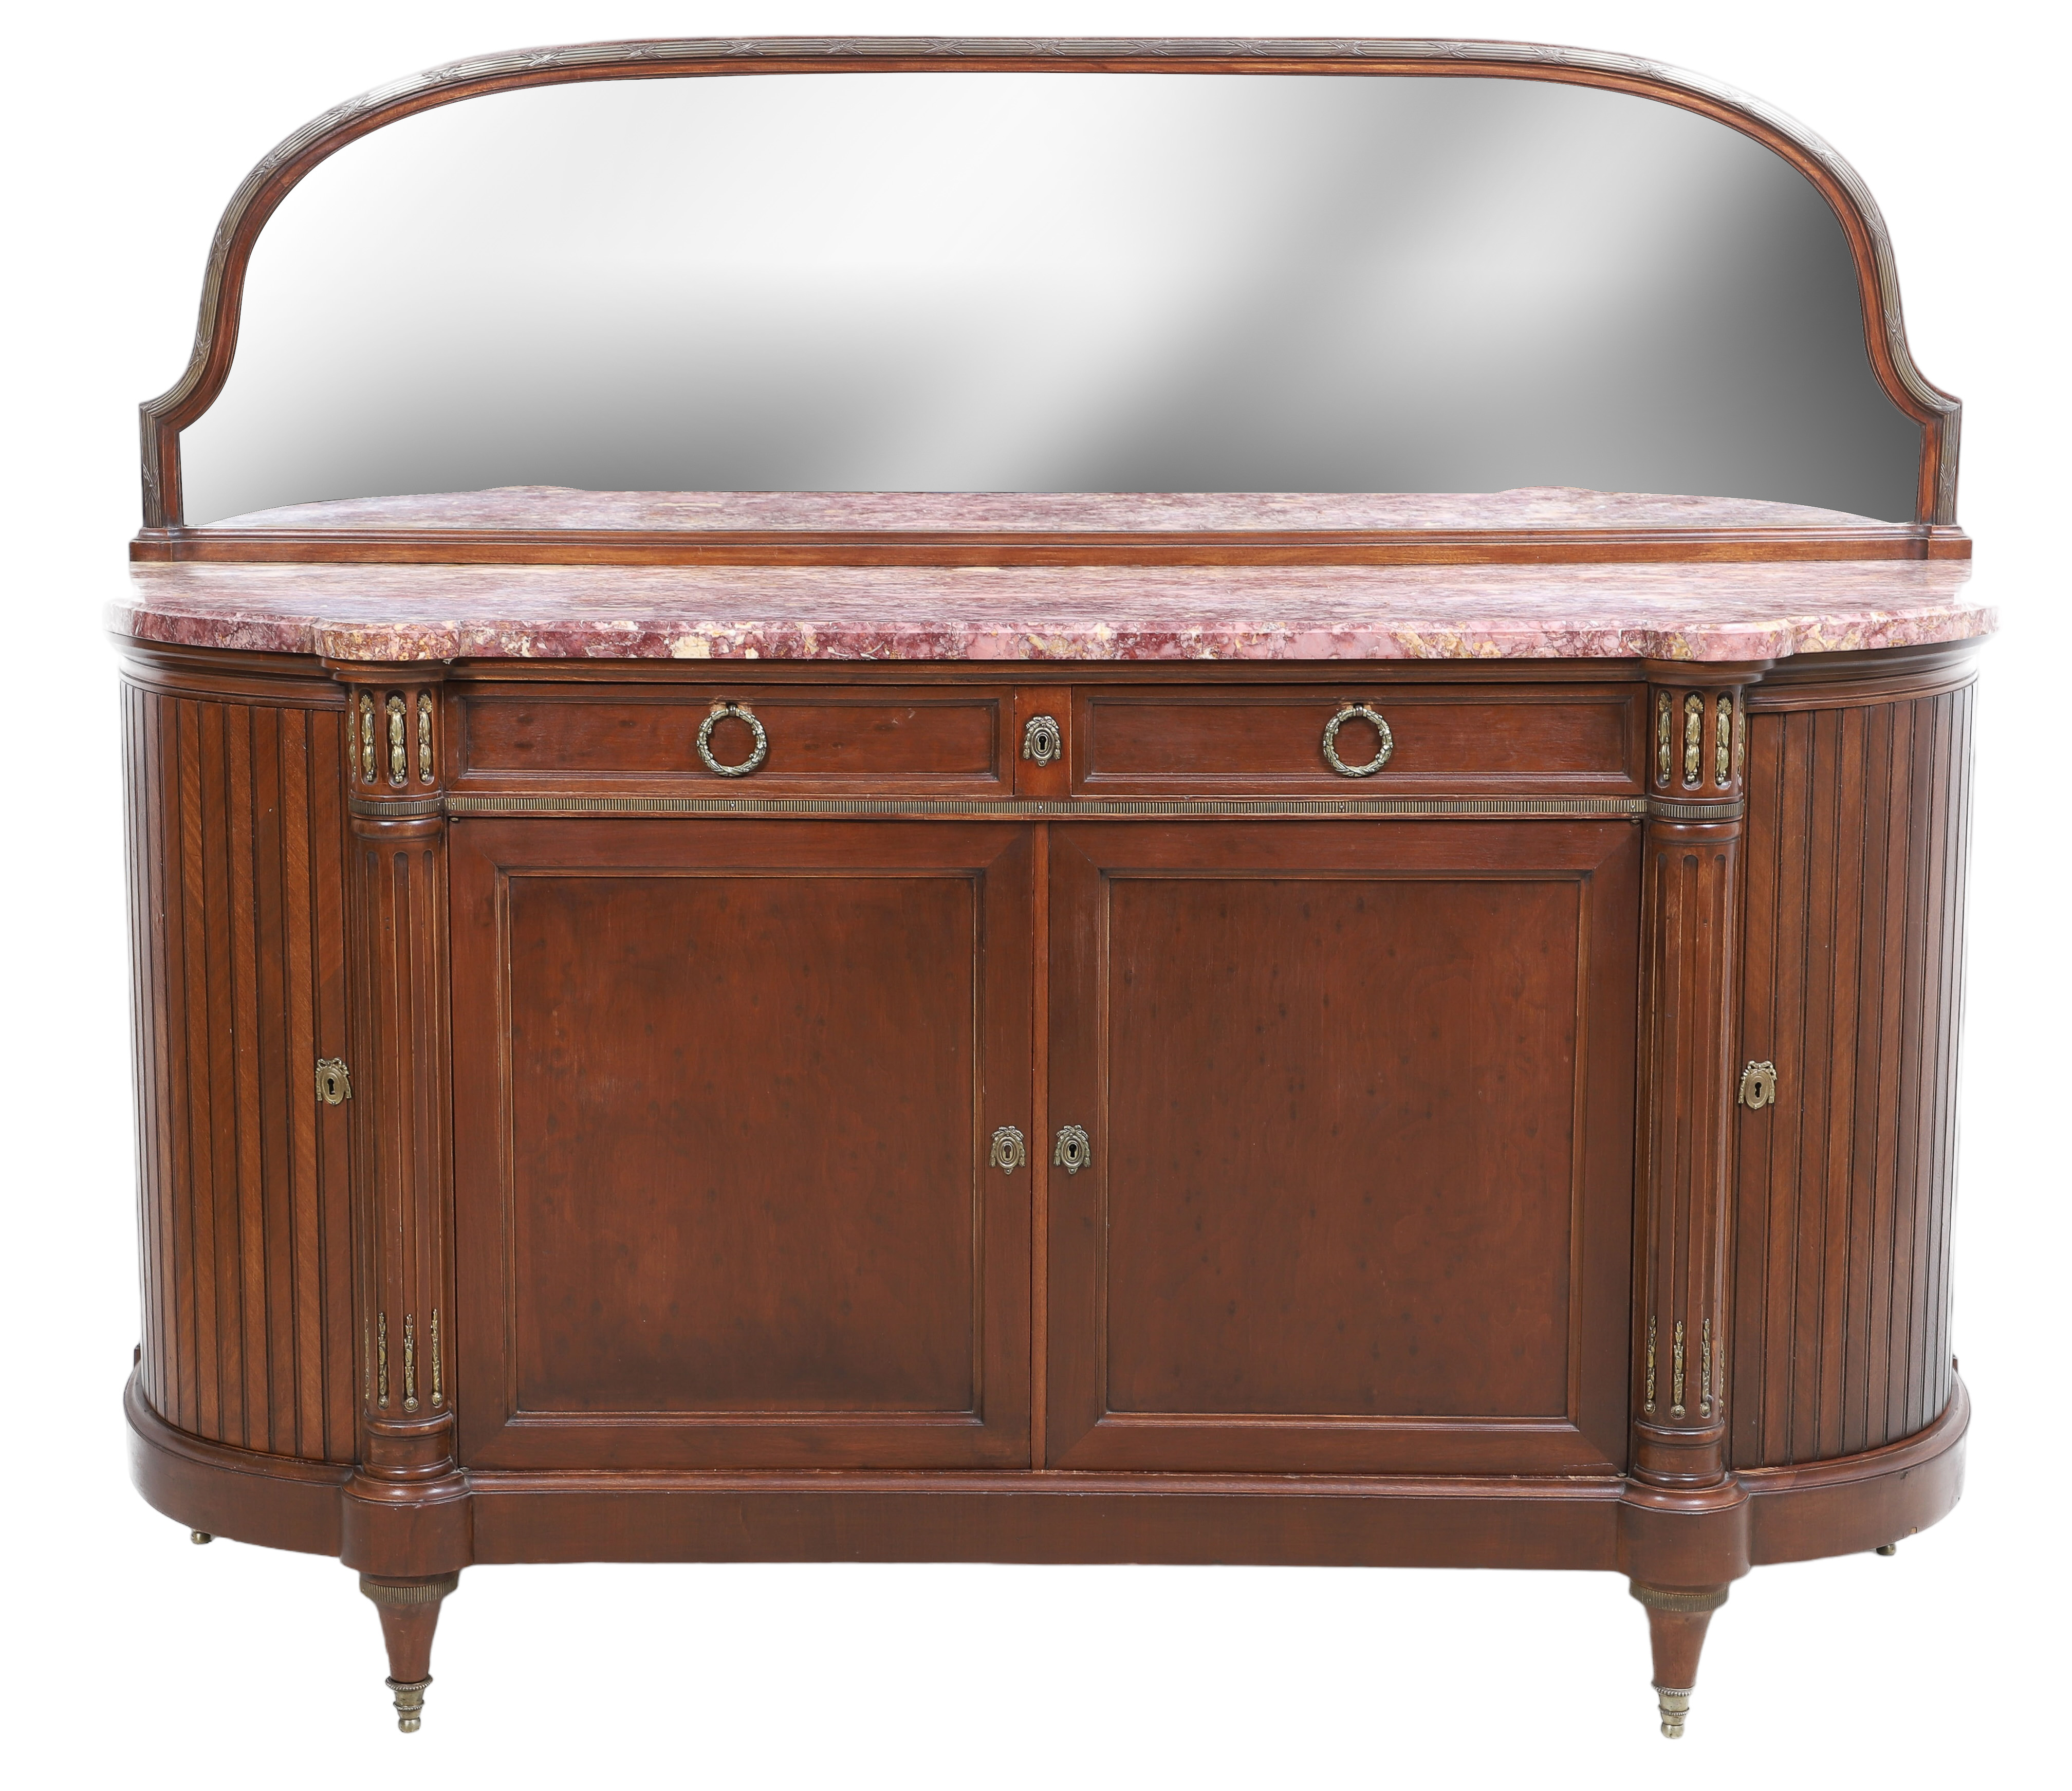 Louis XVI style marbletop sideboard 2e1bb2